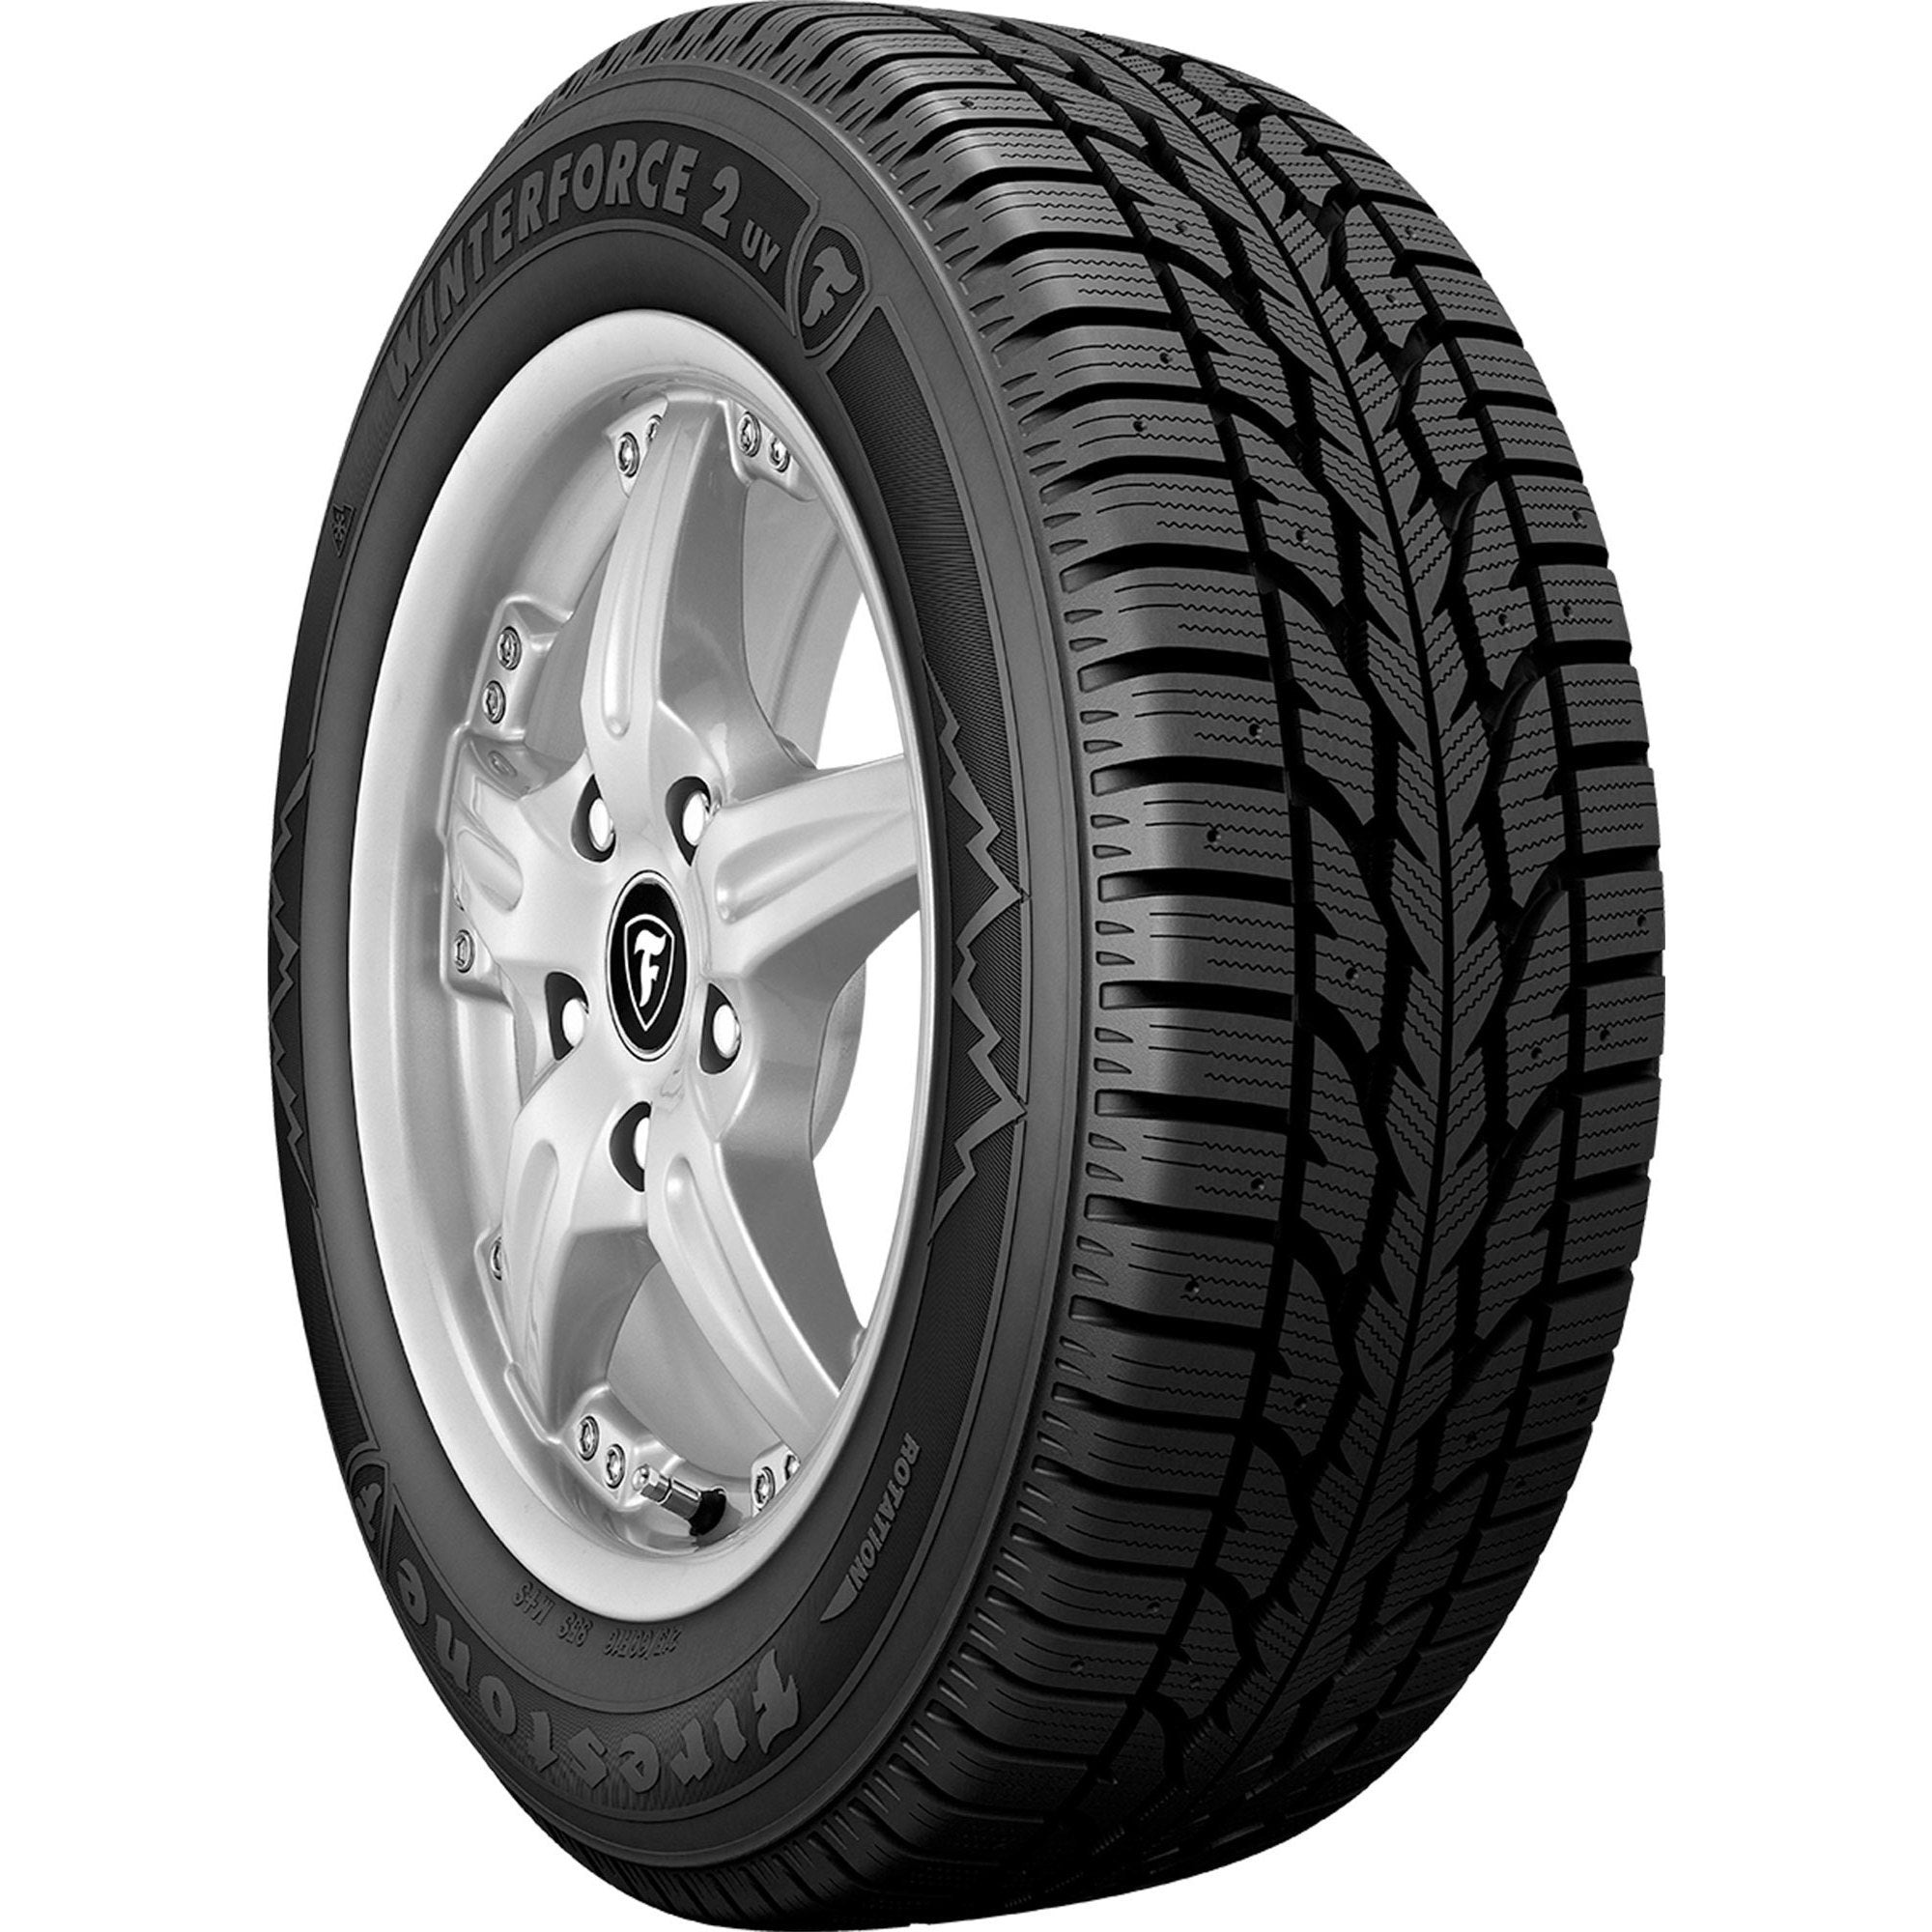 FIRESTONE WINTERFORCE2 UV P265/75R15 (30.7X10.4R 15) Tires